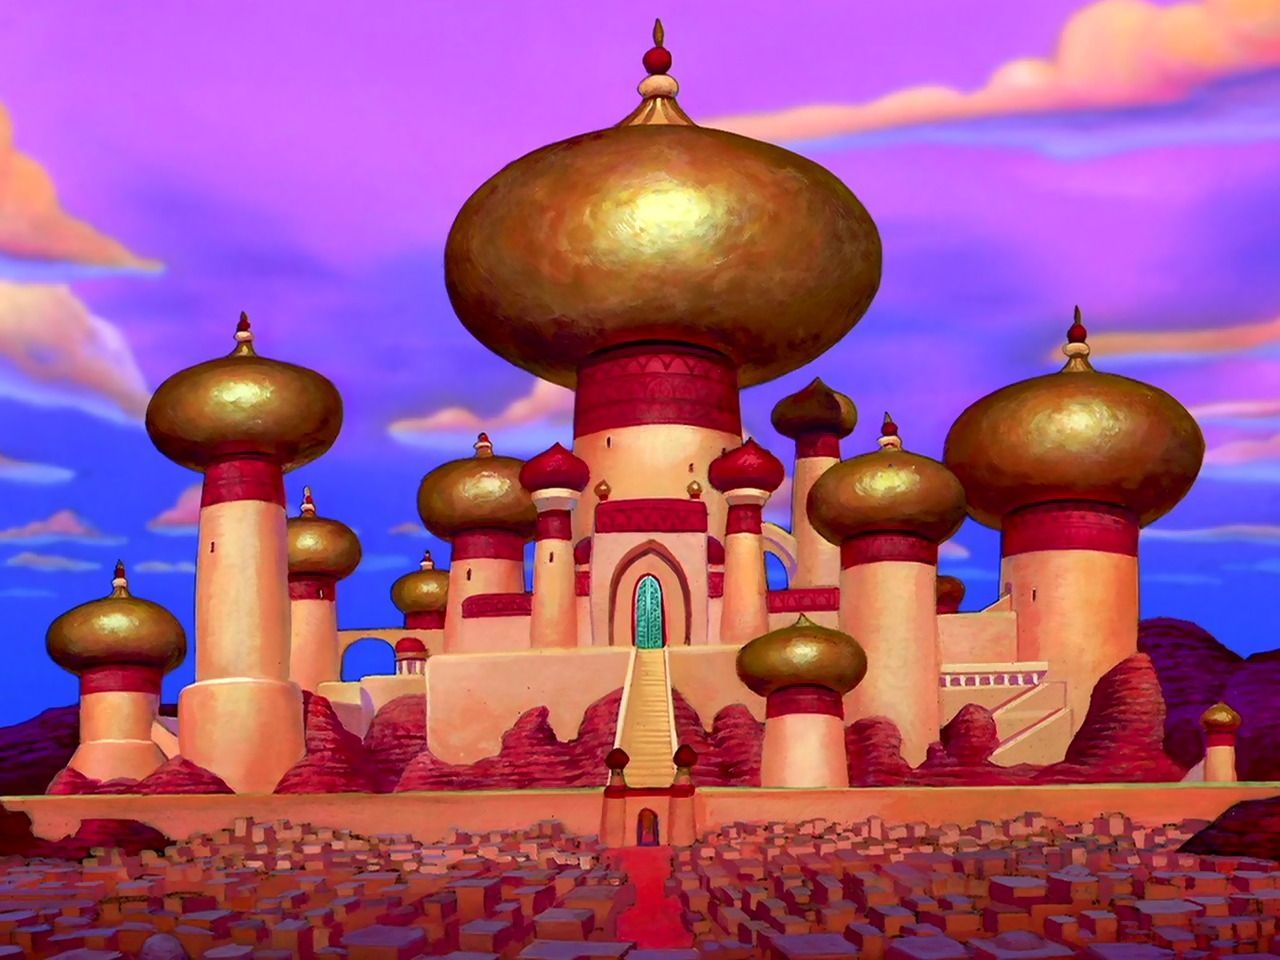 Aladdin palace ideas. aladdin, disney aladdin, aladdin 1992